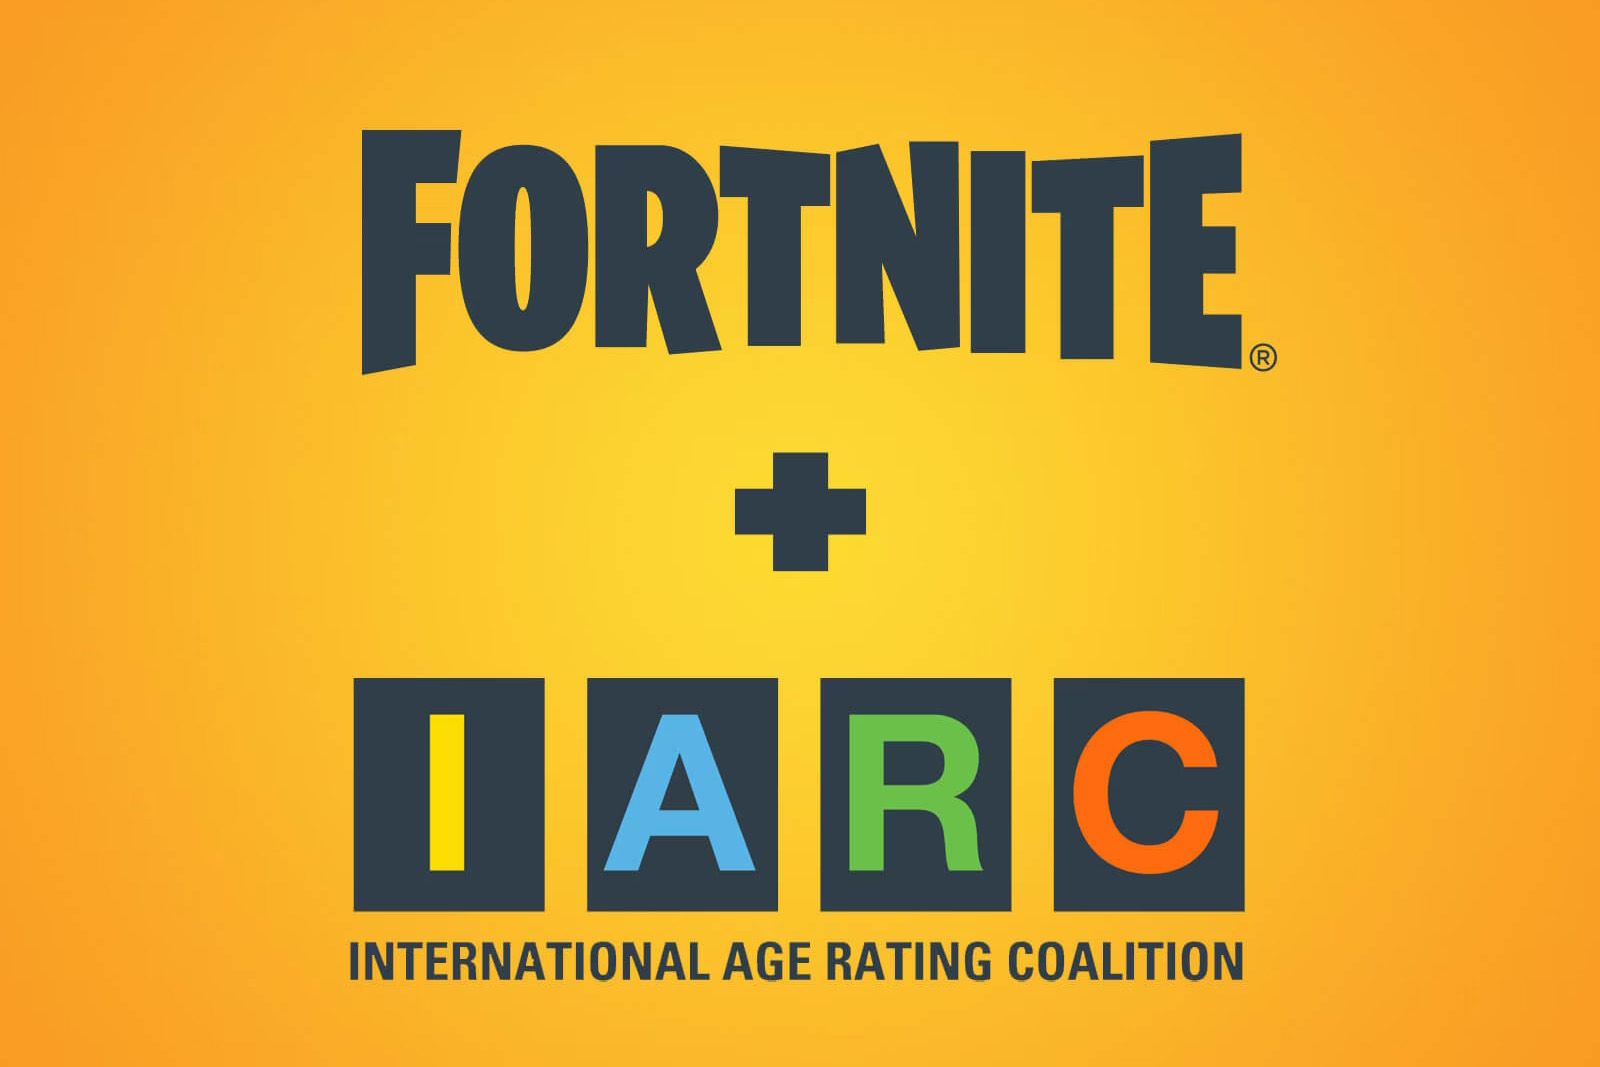 Fortnite IARC